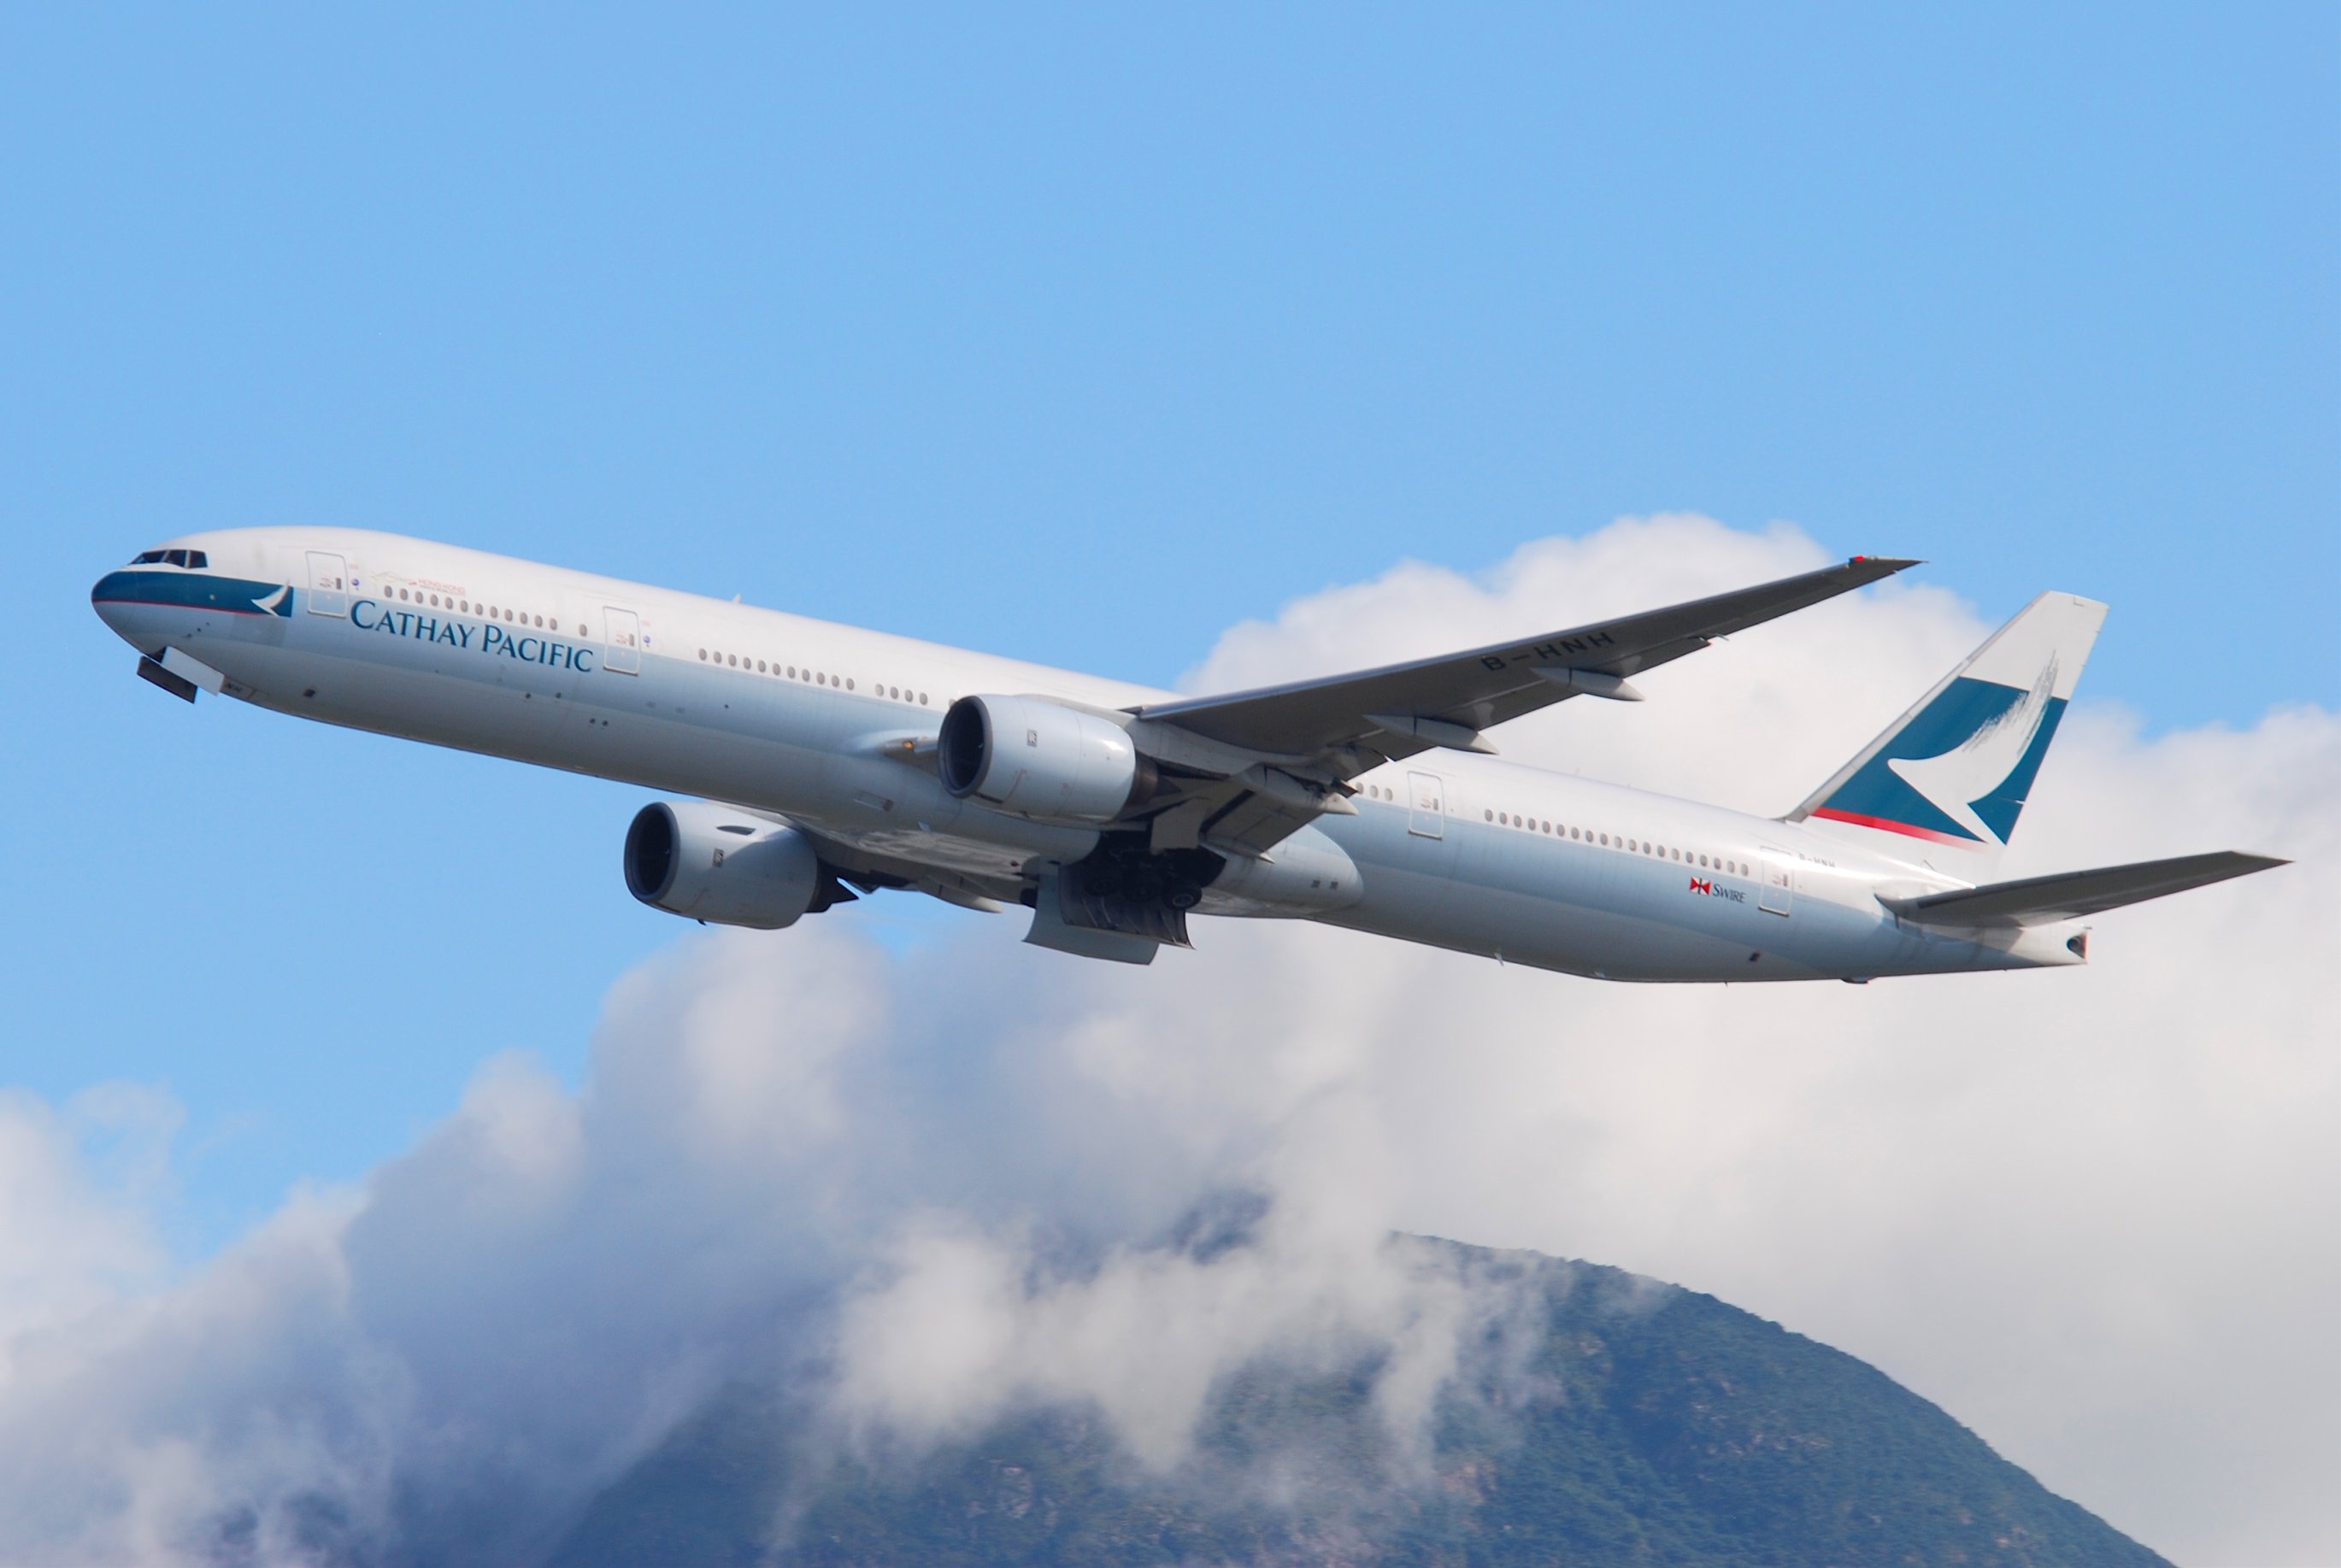 File:Cathay Pacific Boeing 777-300; B-HNH@HKG;31.07.2011 614tz (6053499684).jpg - Wikipedia